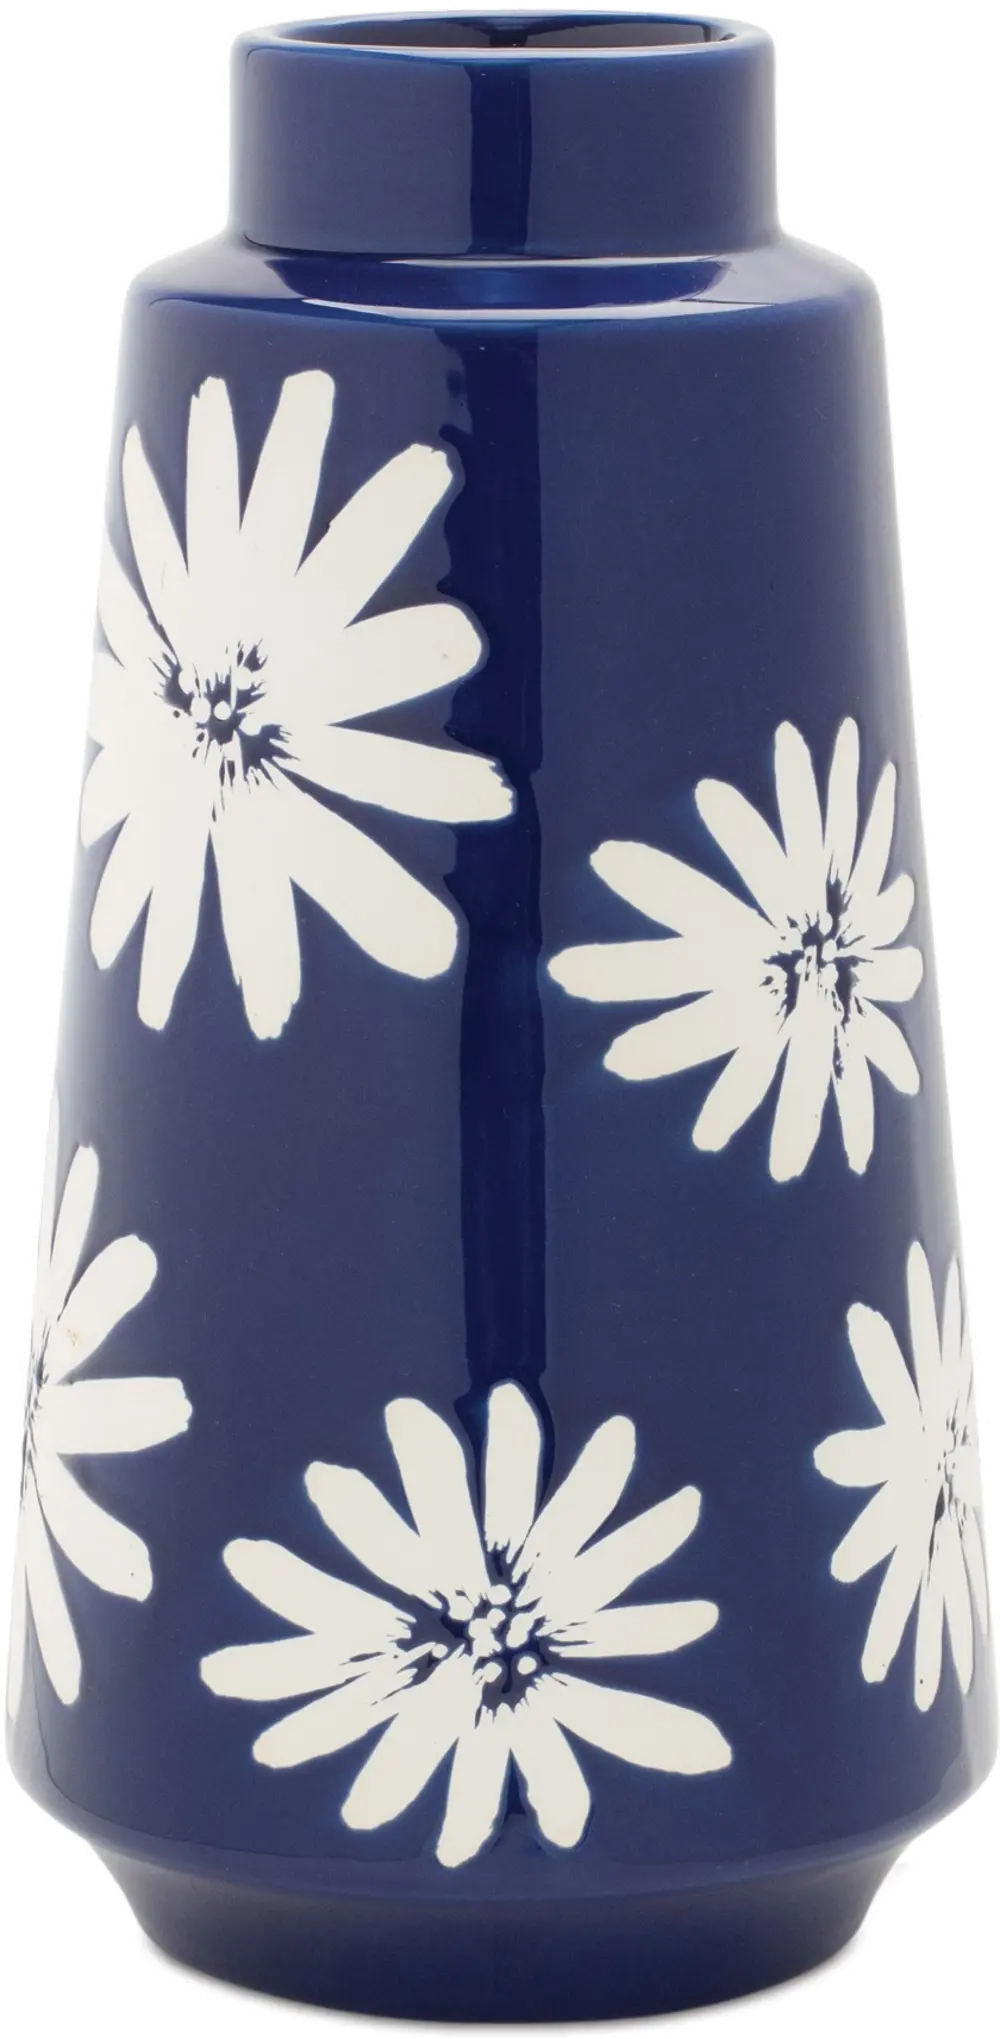 Large 11.75-Inch Blue and White Flower Ceramic Vase-1